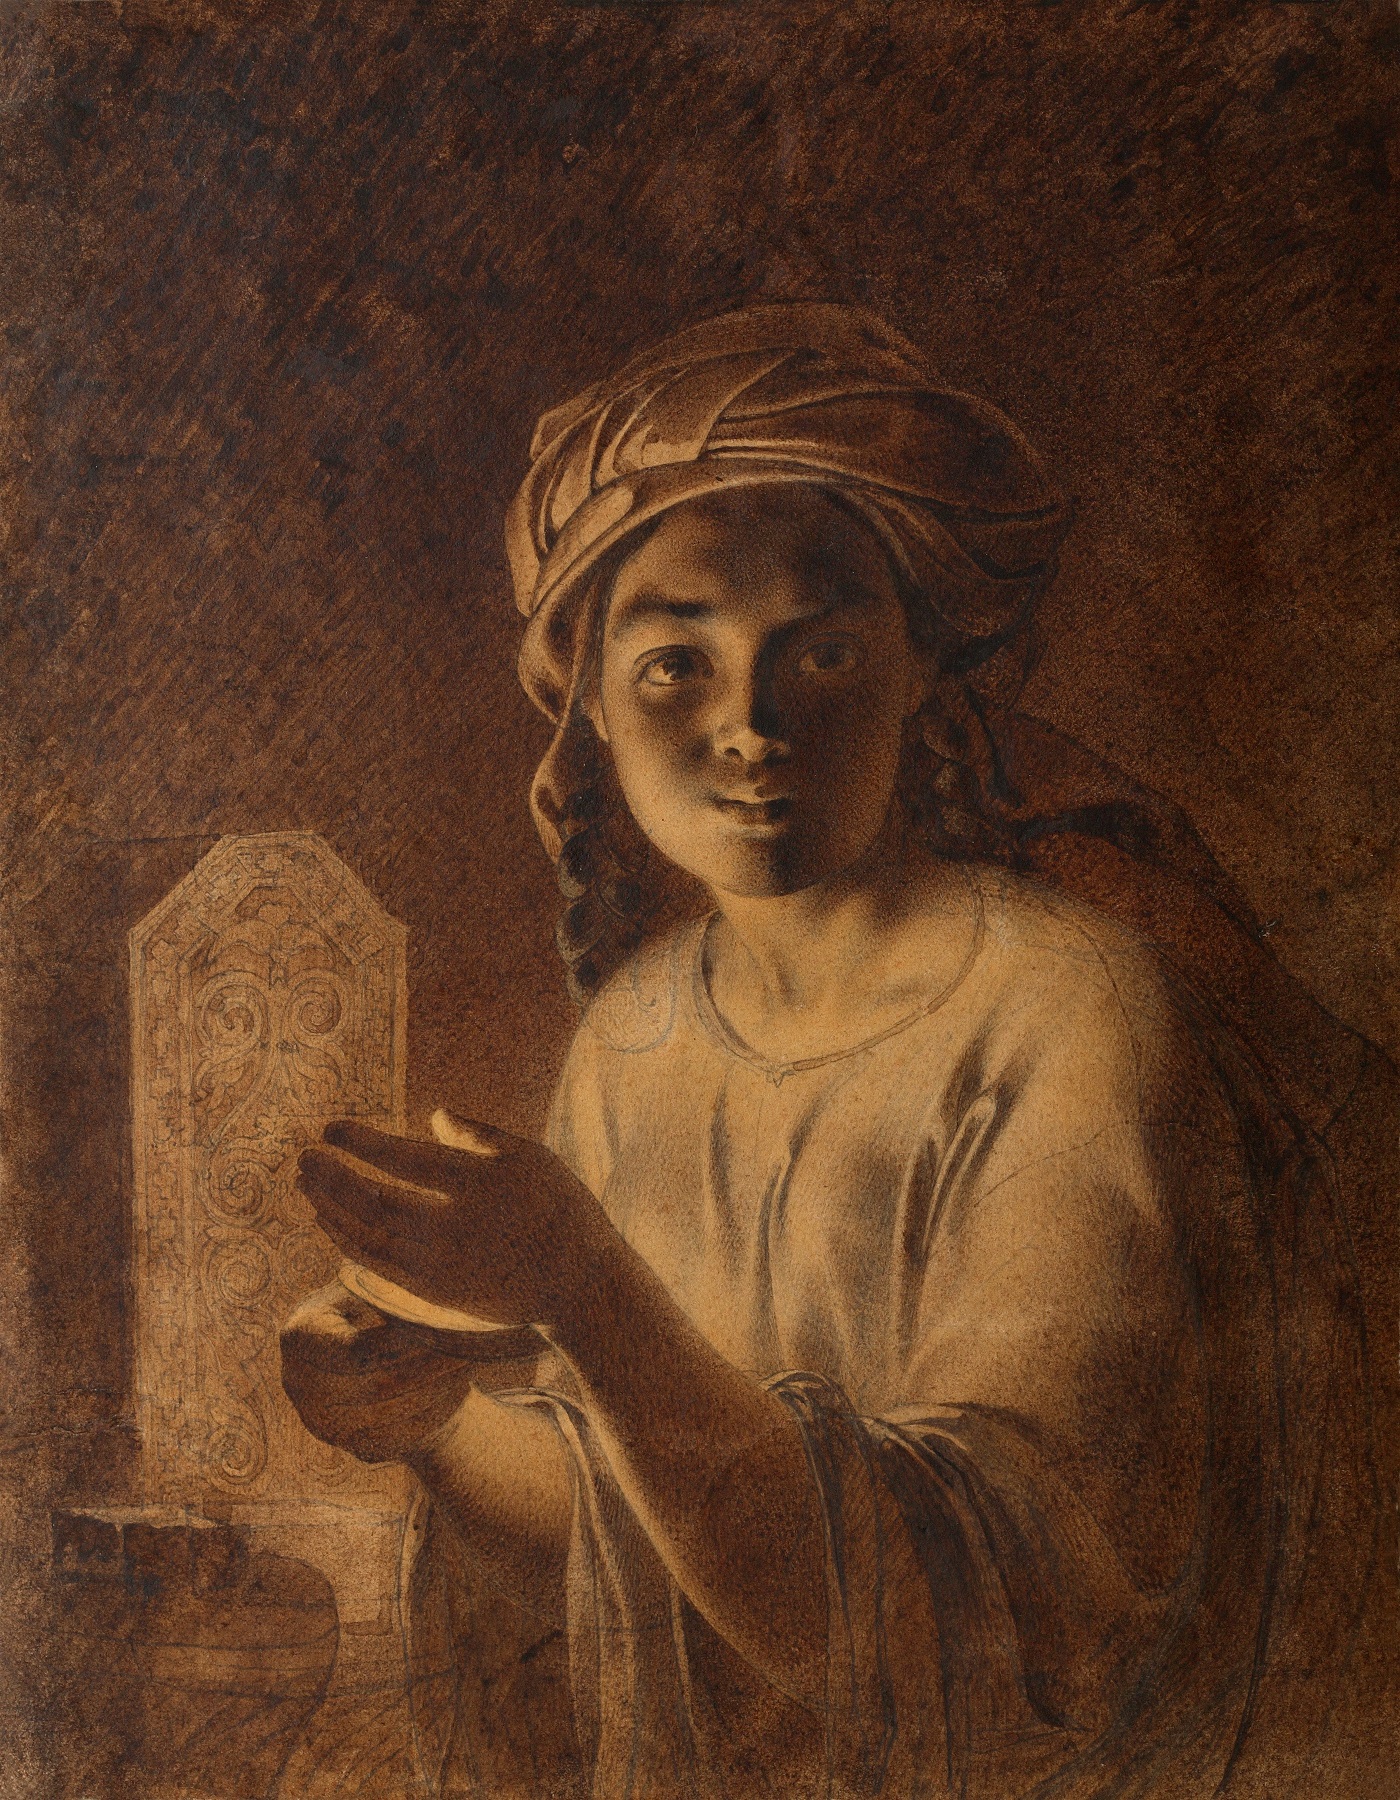 Kazakh Girl, Katya, 1856-1857, sepia